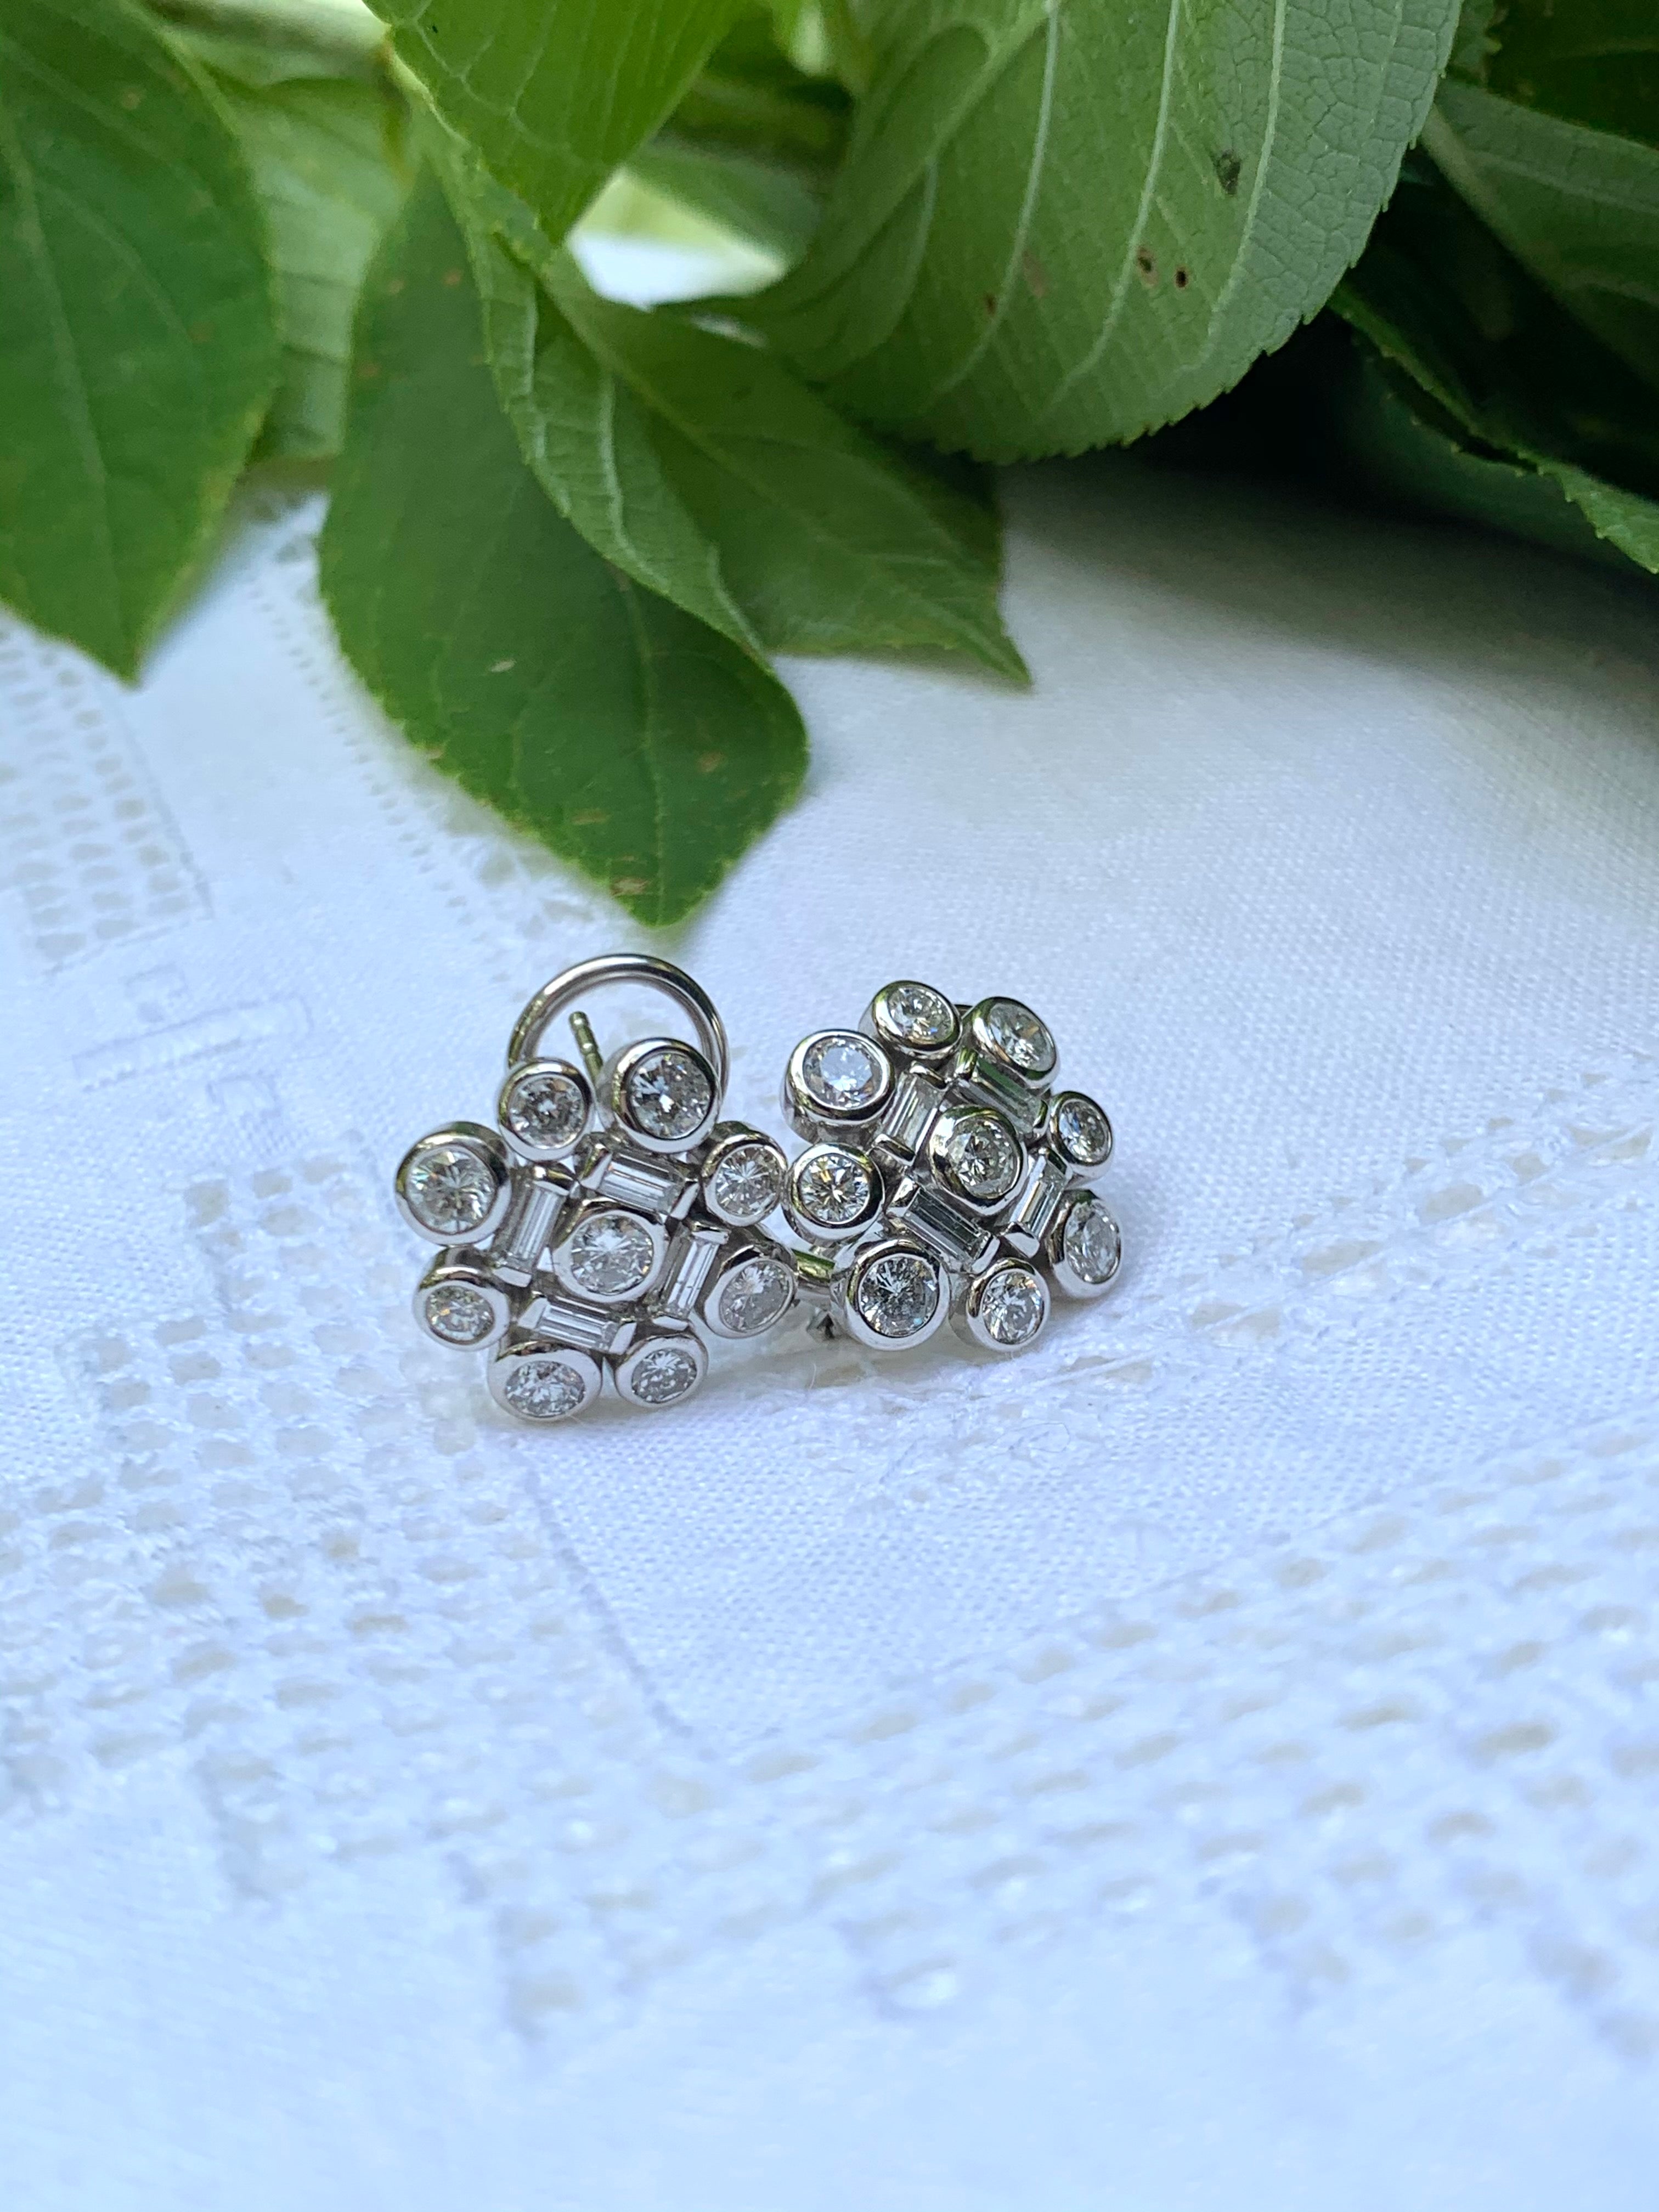 The Brittingham Estate Vintage Diamond earrings